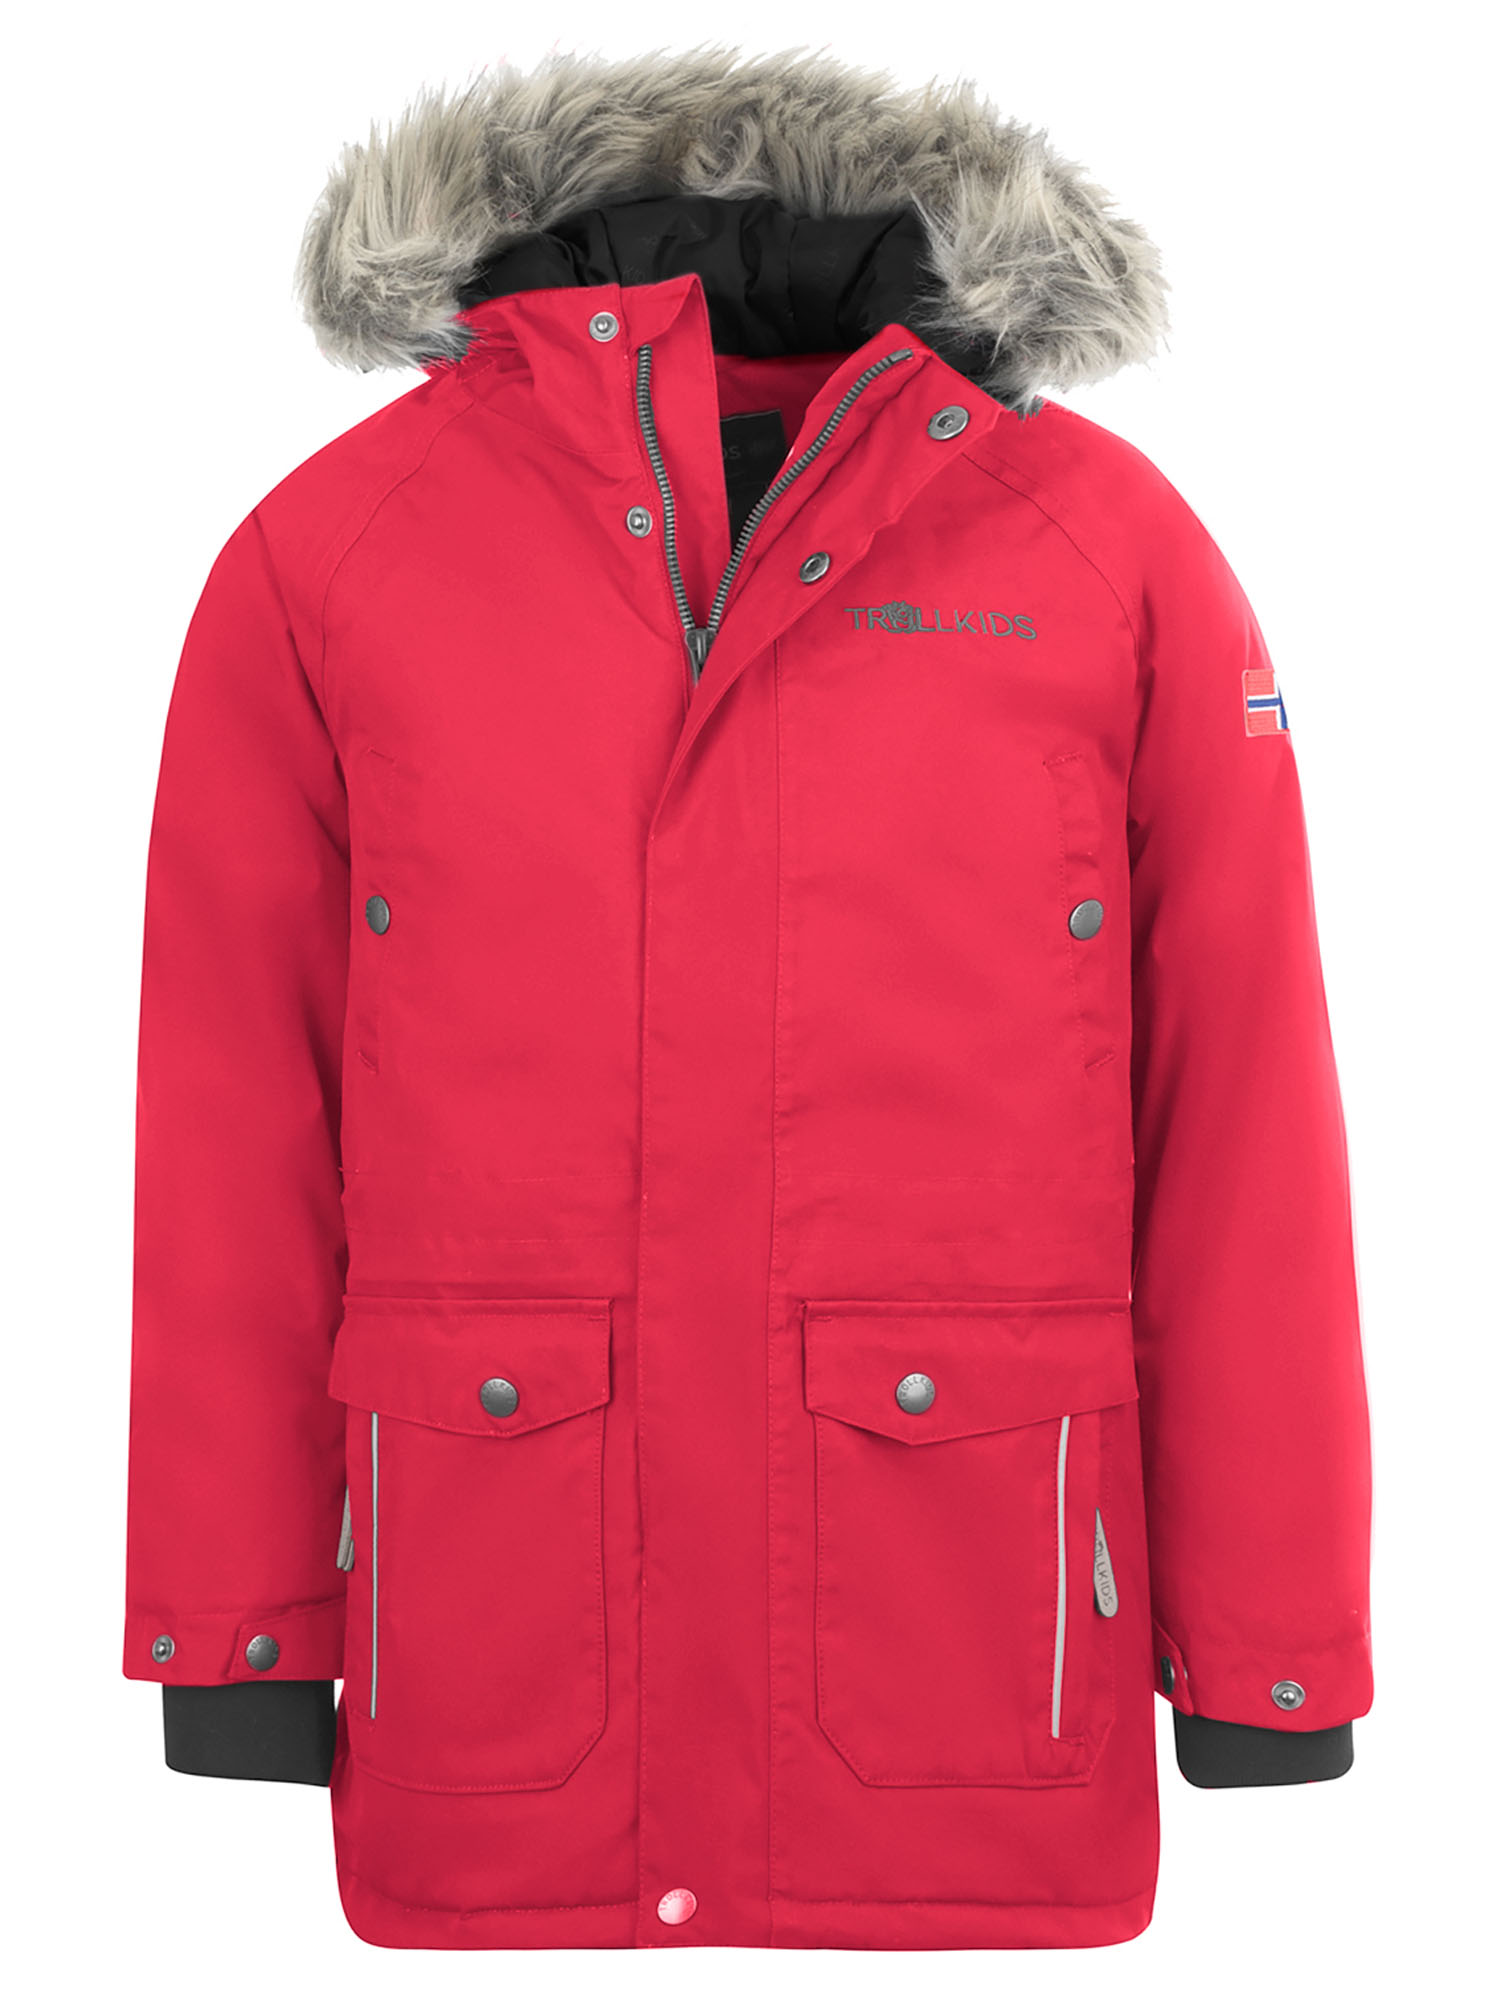 Куртка Детская Trollkids Nordkapp Bright Red (Рост:164) куртка детская roxy snowy tale snow jacket girl s bright white naive rg р 122